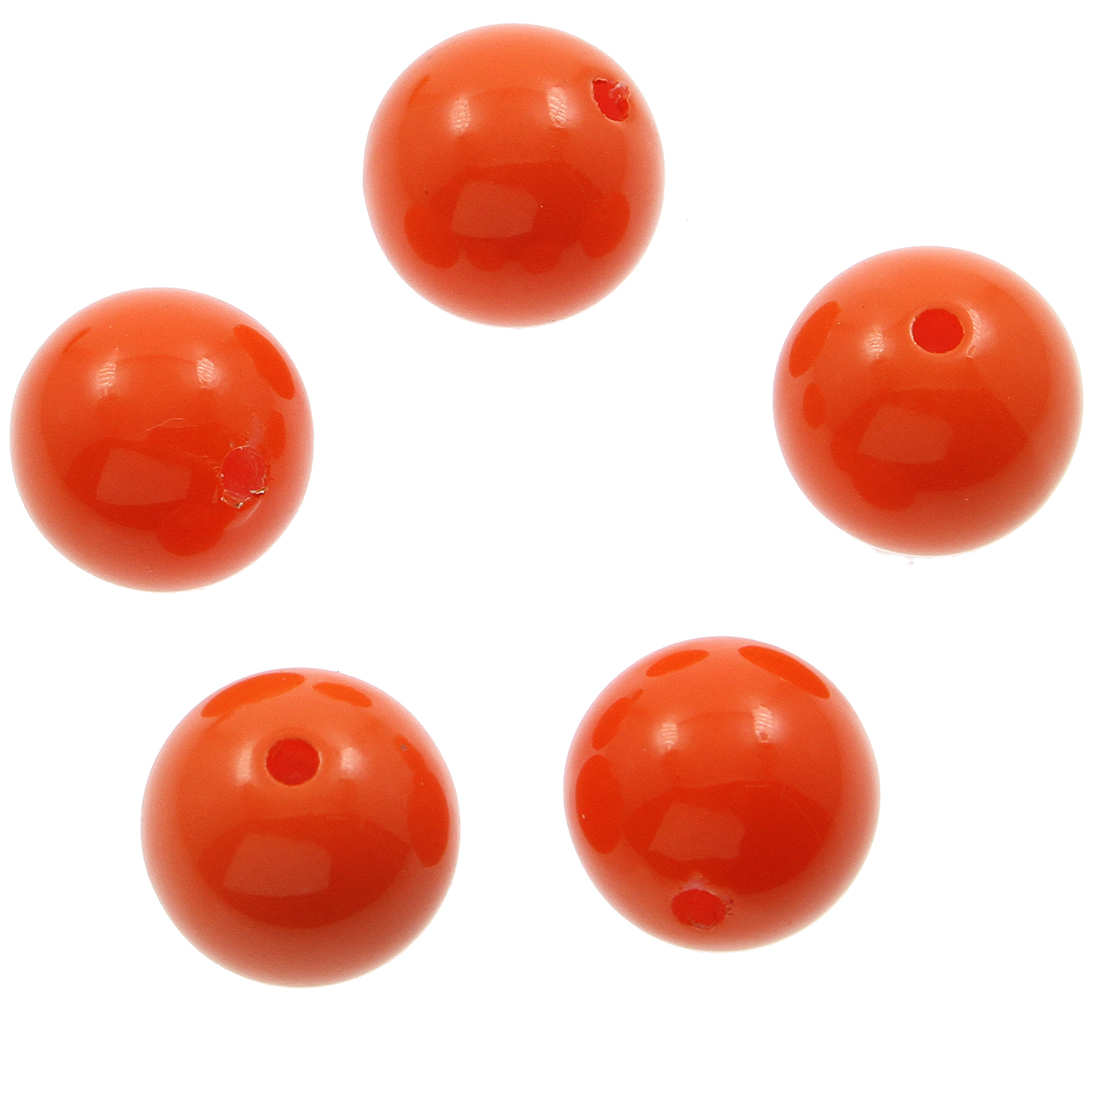 5 orange red